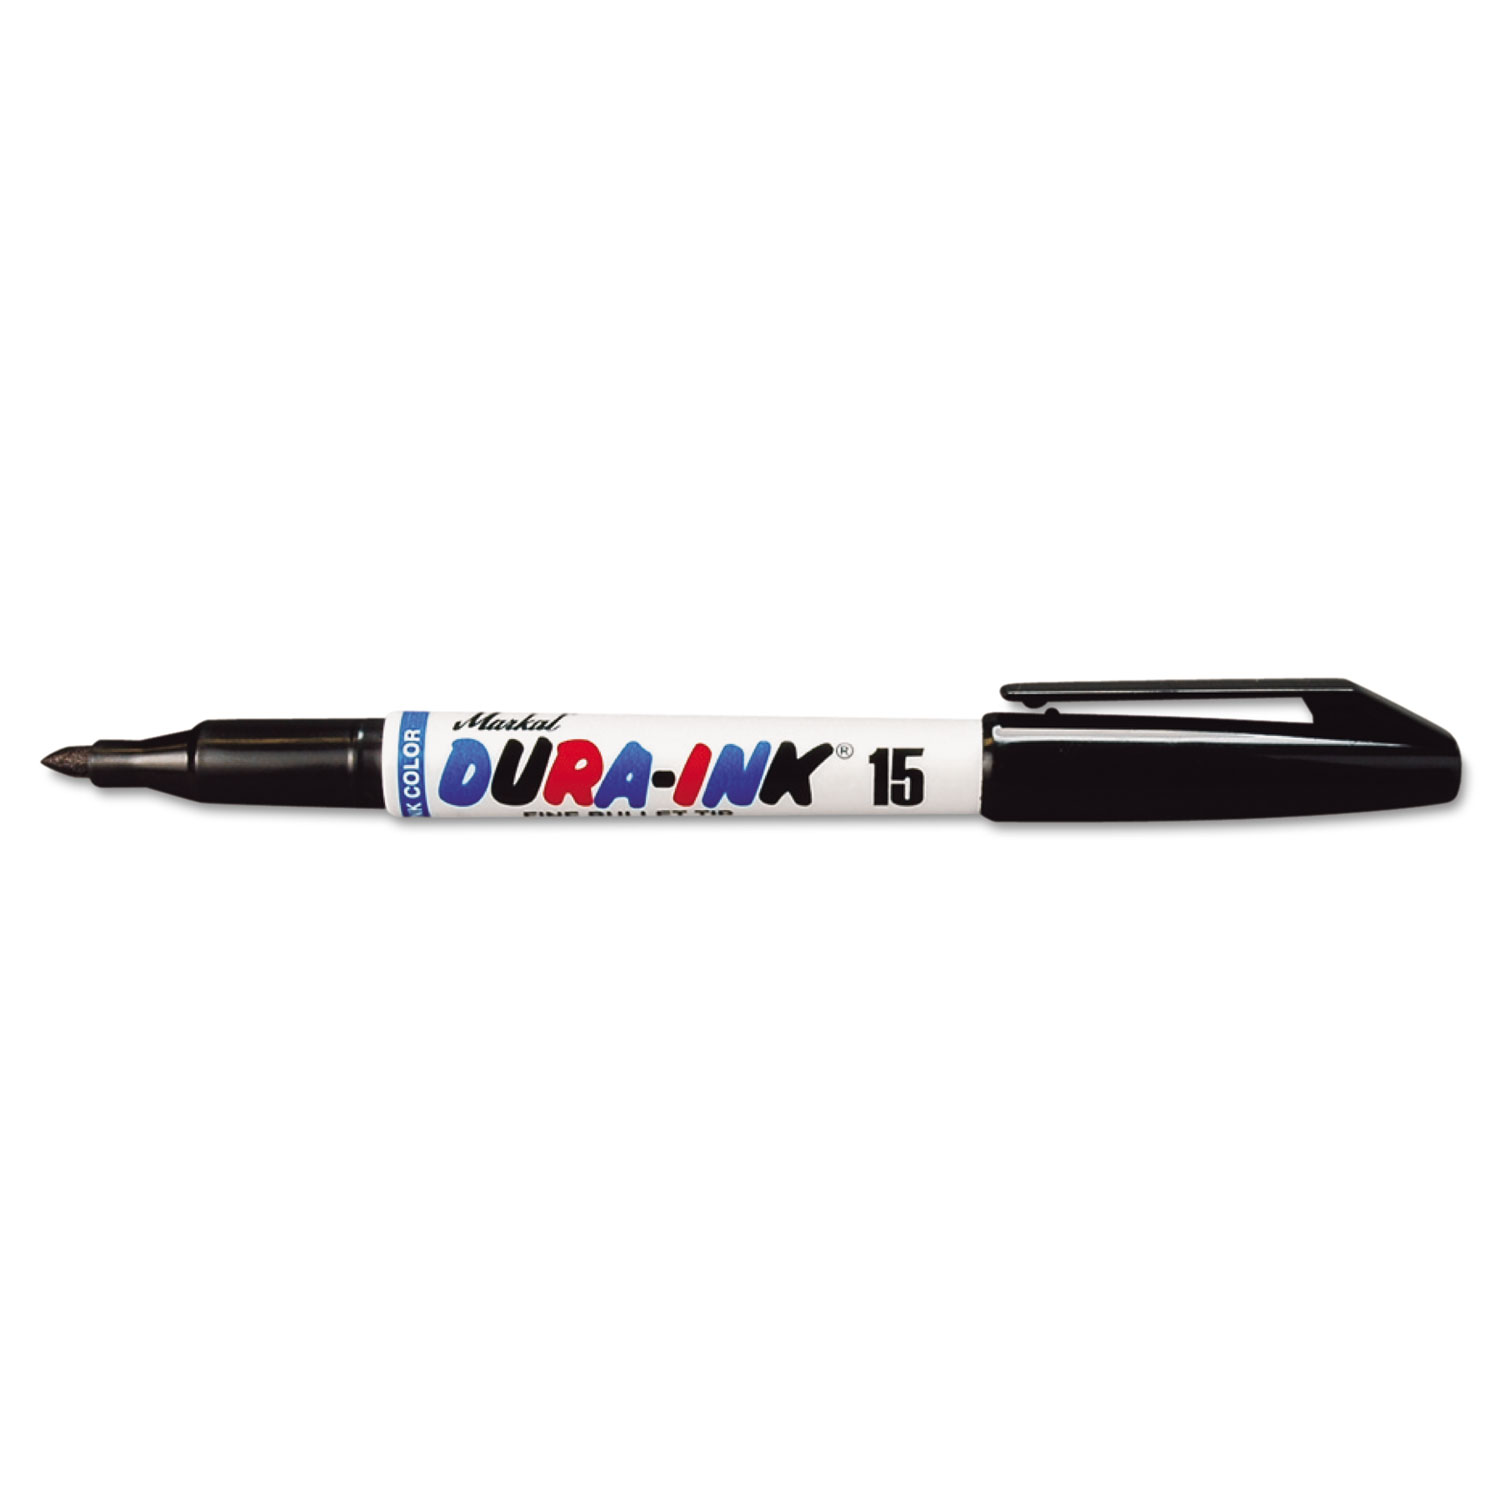 Dura-Ink 15 Felt-Tip Marker, Black